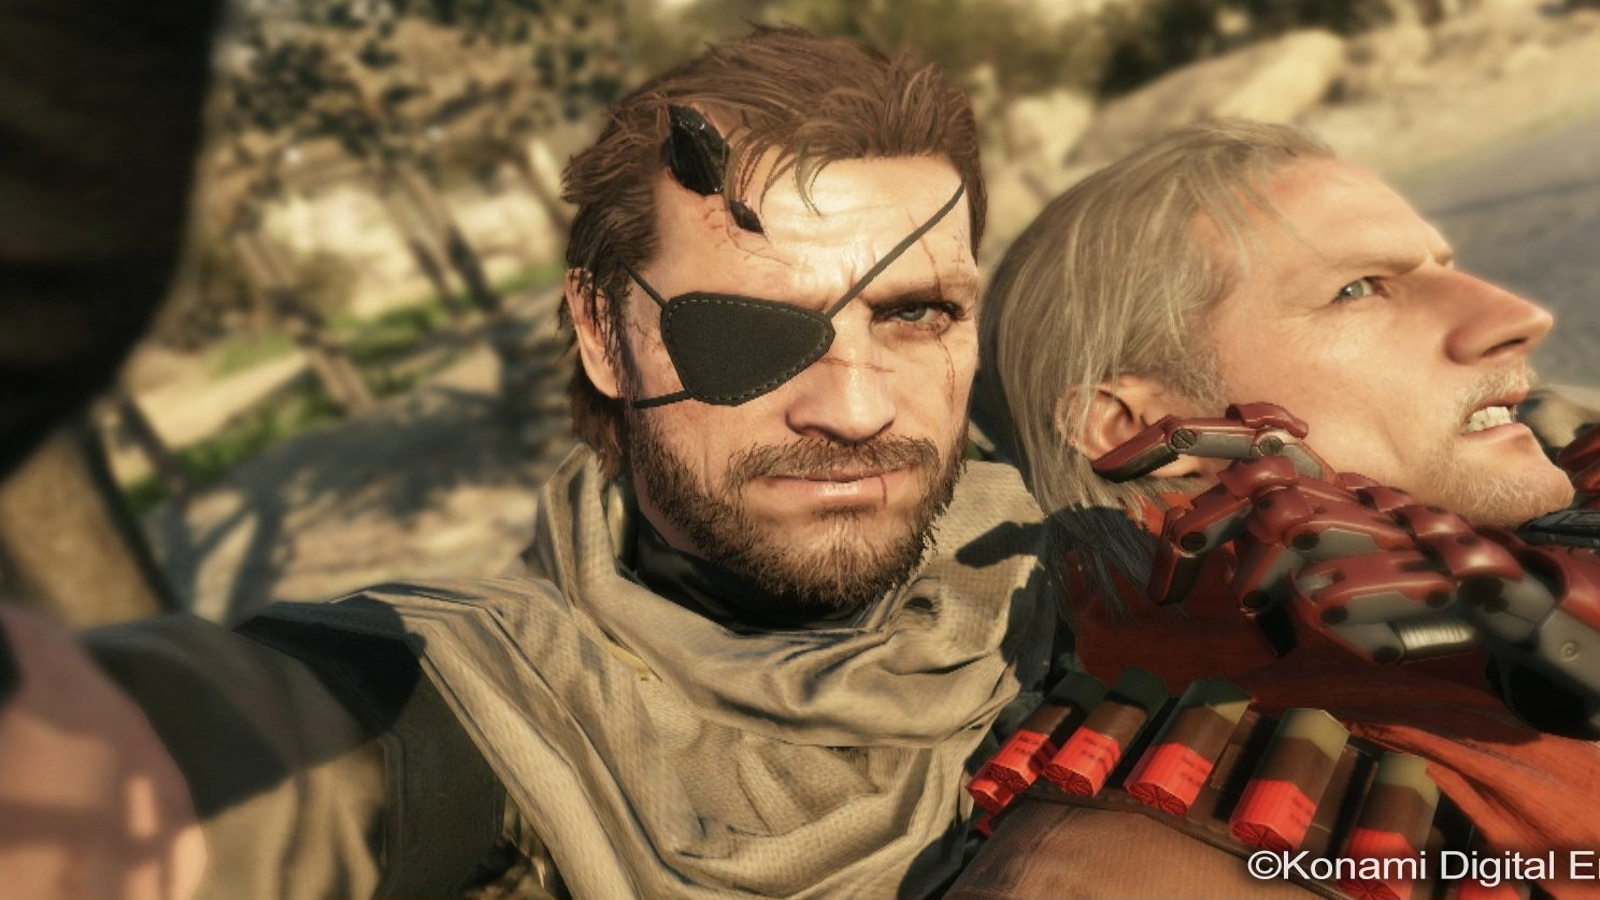 Metal Gear Solid 5 includes Metal Gear Online